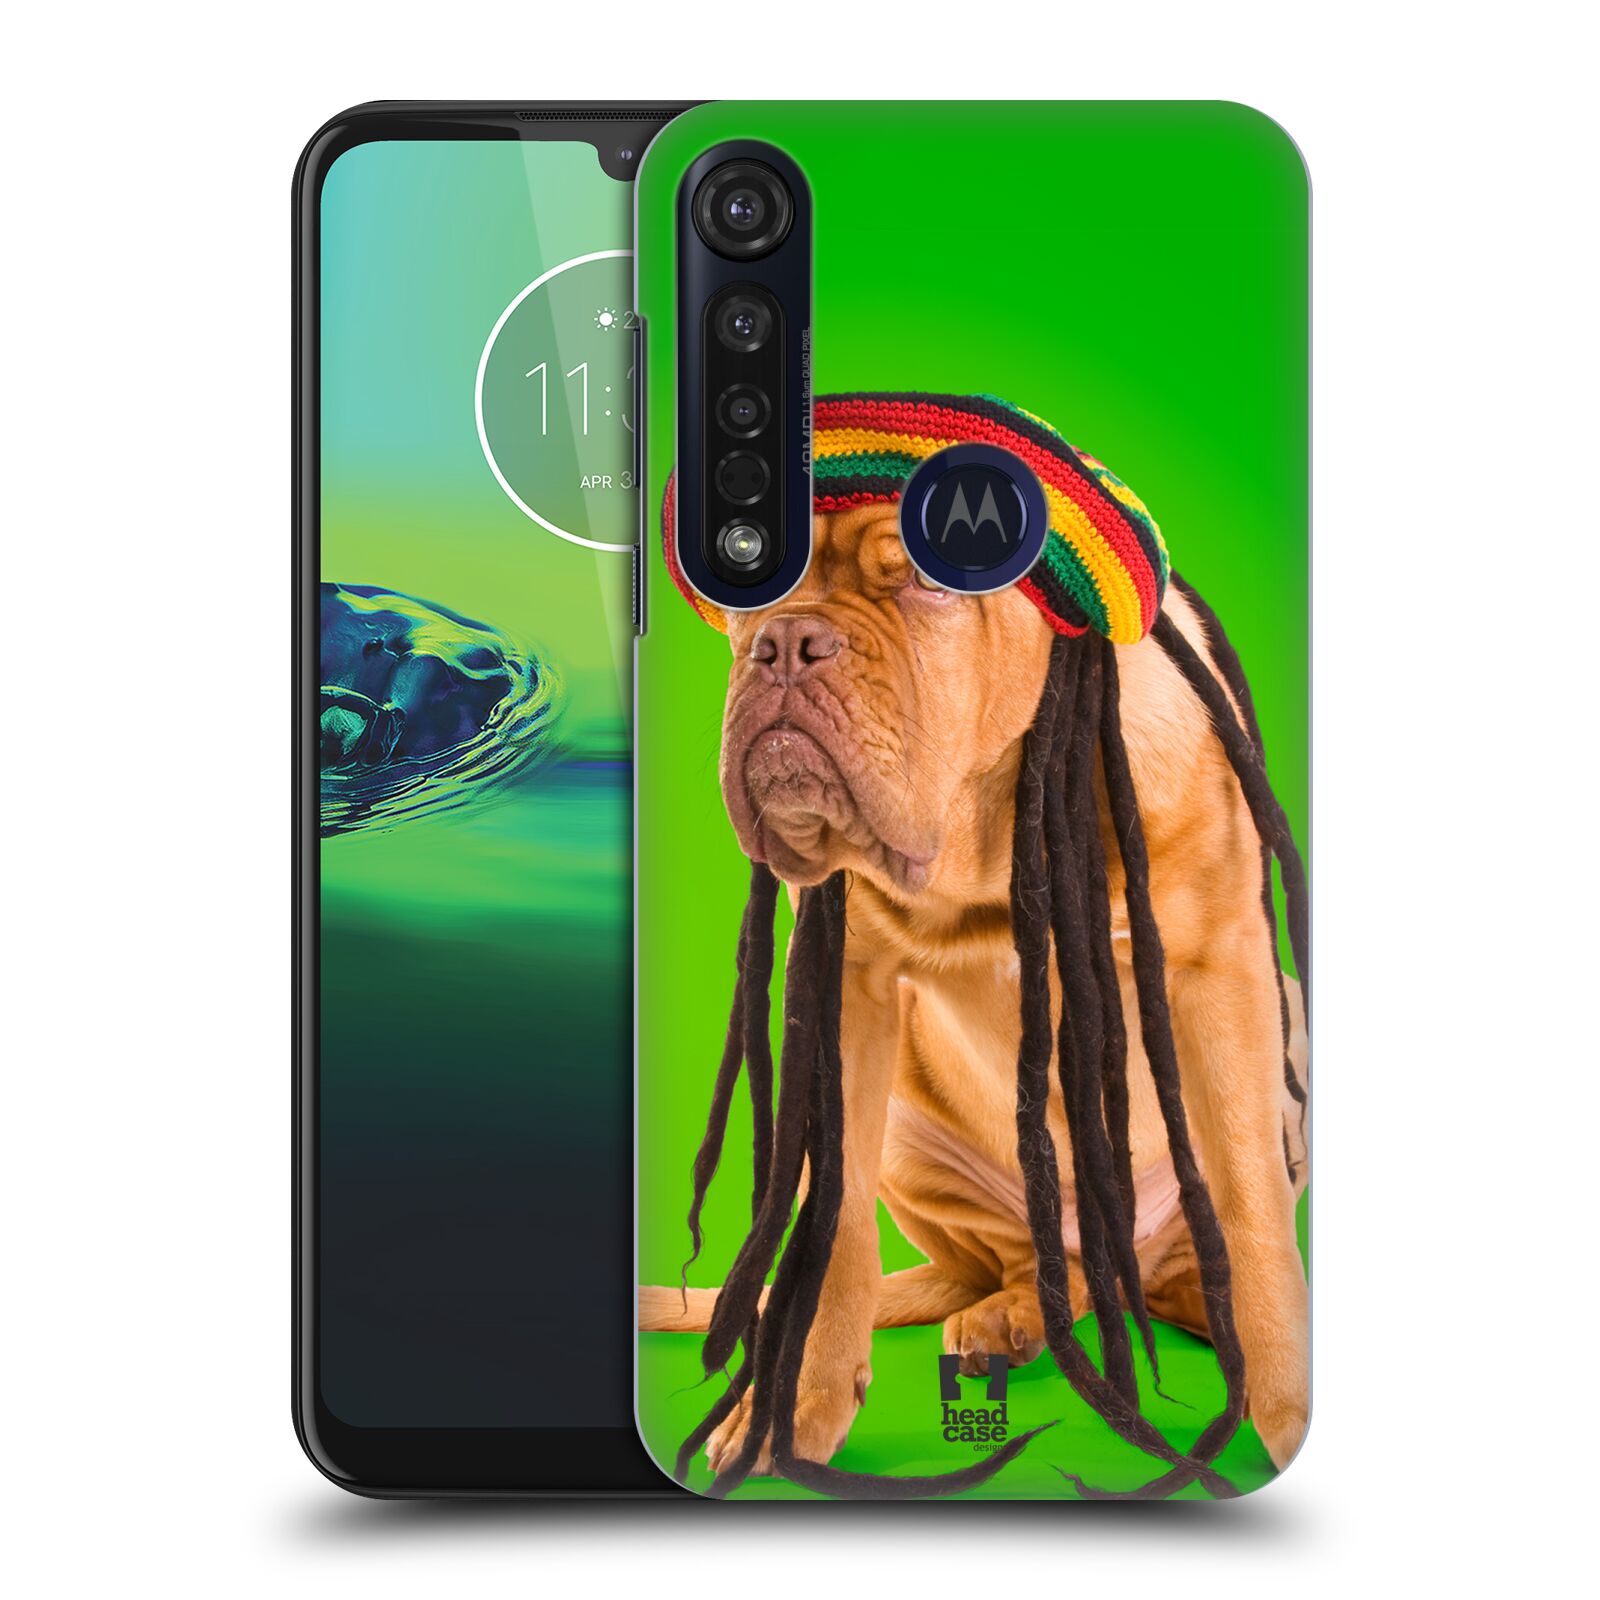 Pouzdro na mobil Motorola Moto G8 PLUS - HEAD CASE - vzor Legrační zvířátka pejsek dredy Rastafarián